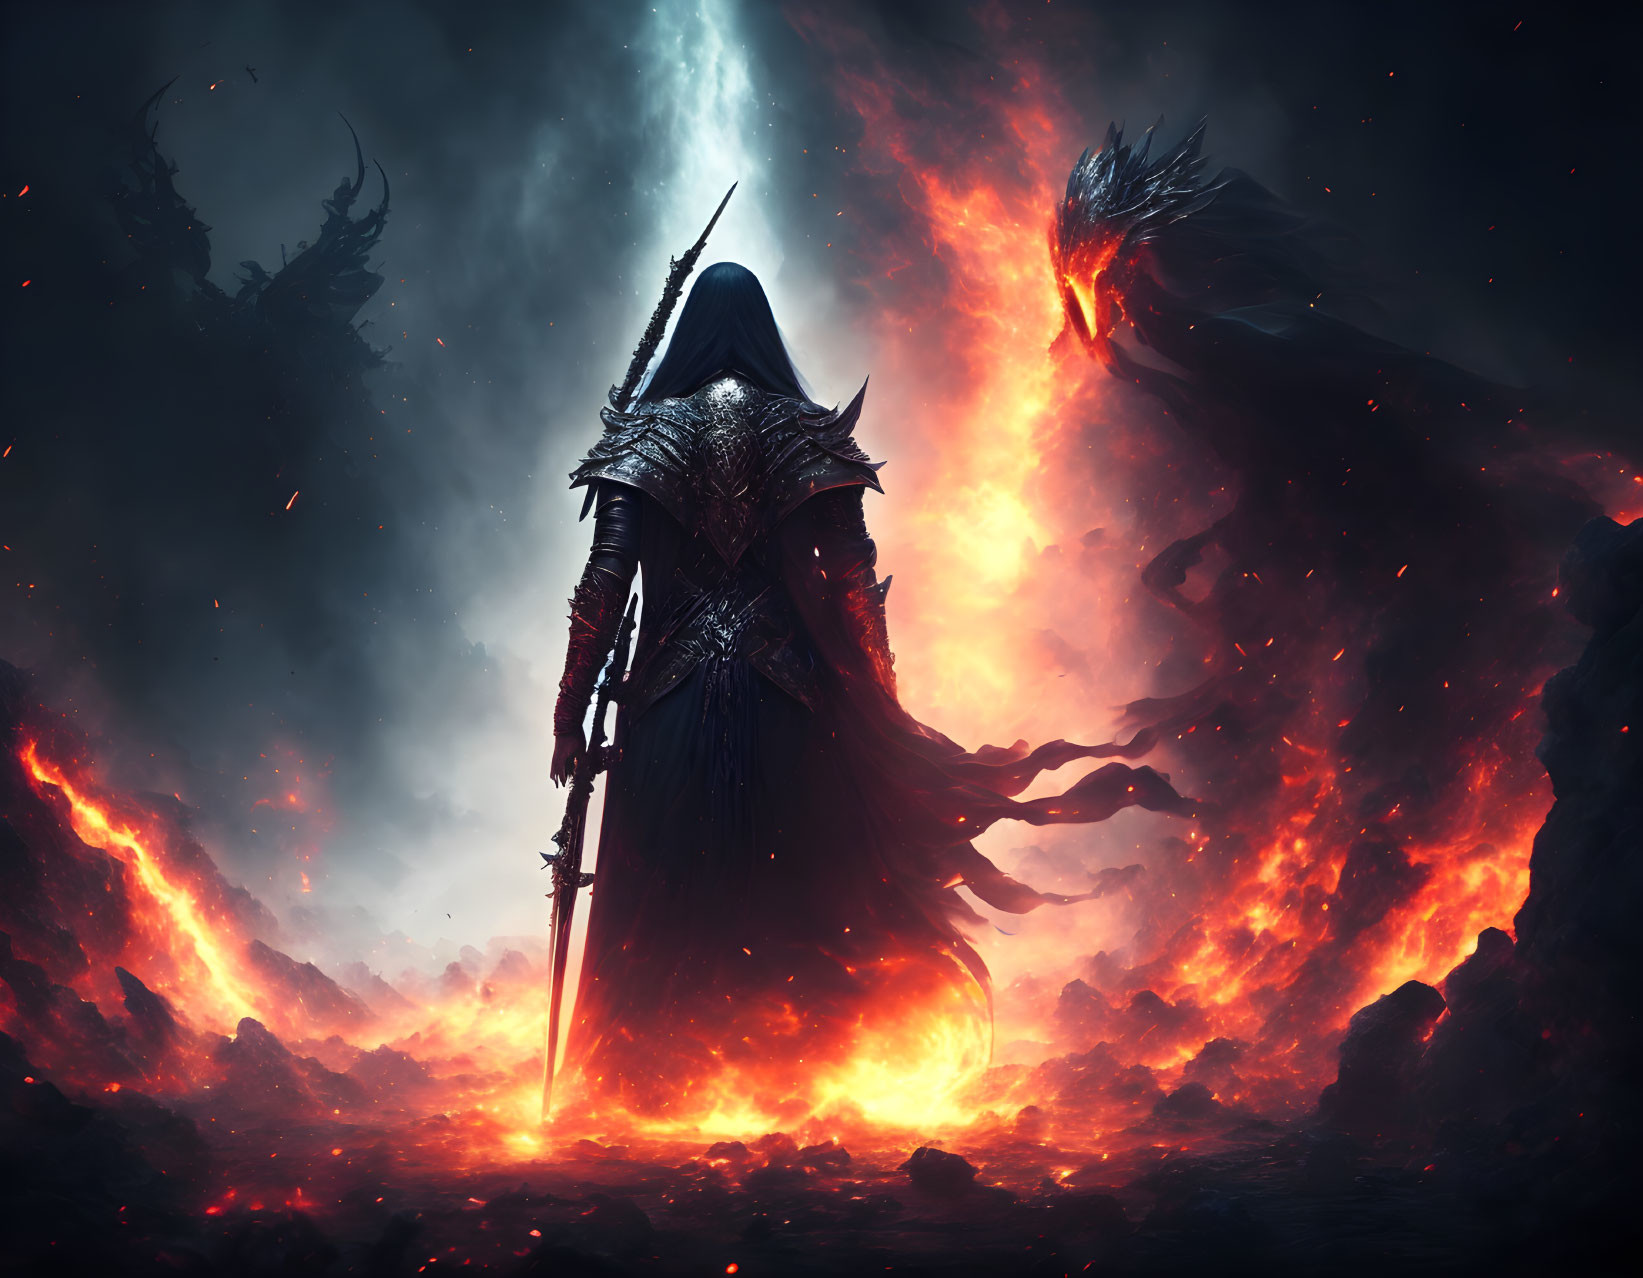 Cloaked figure with sword in fiery fantasy landscape